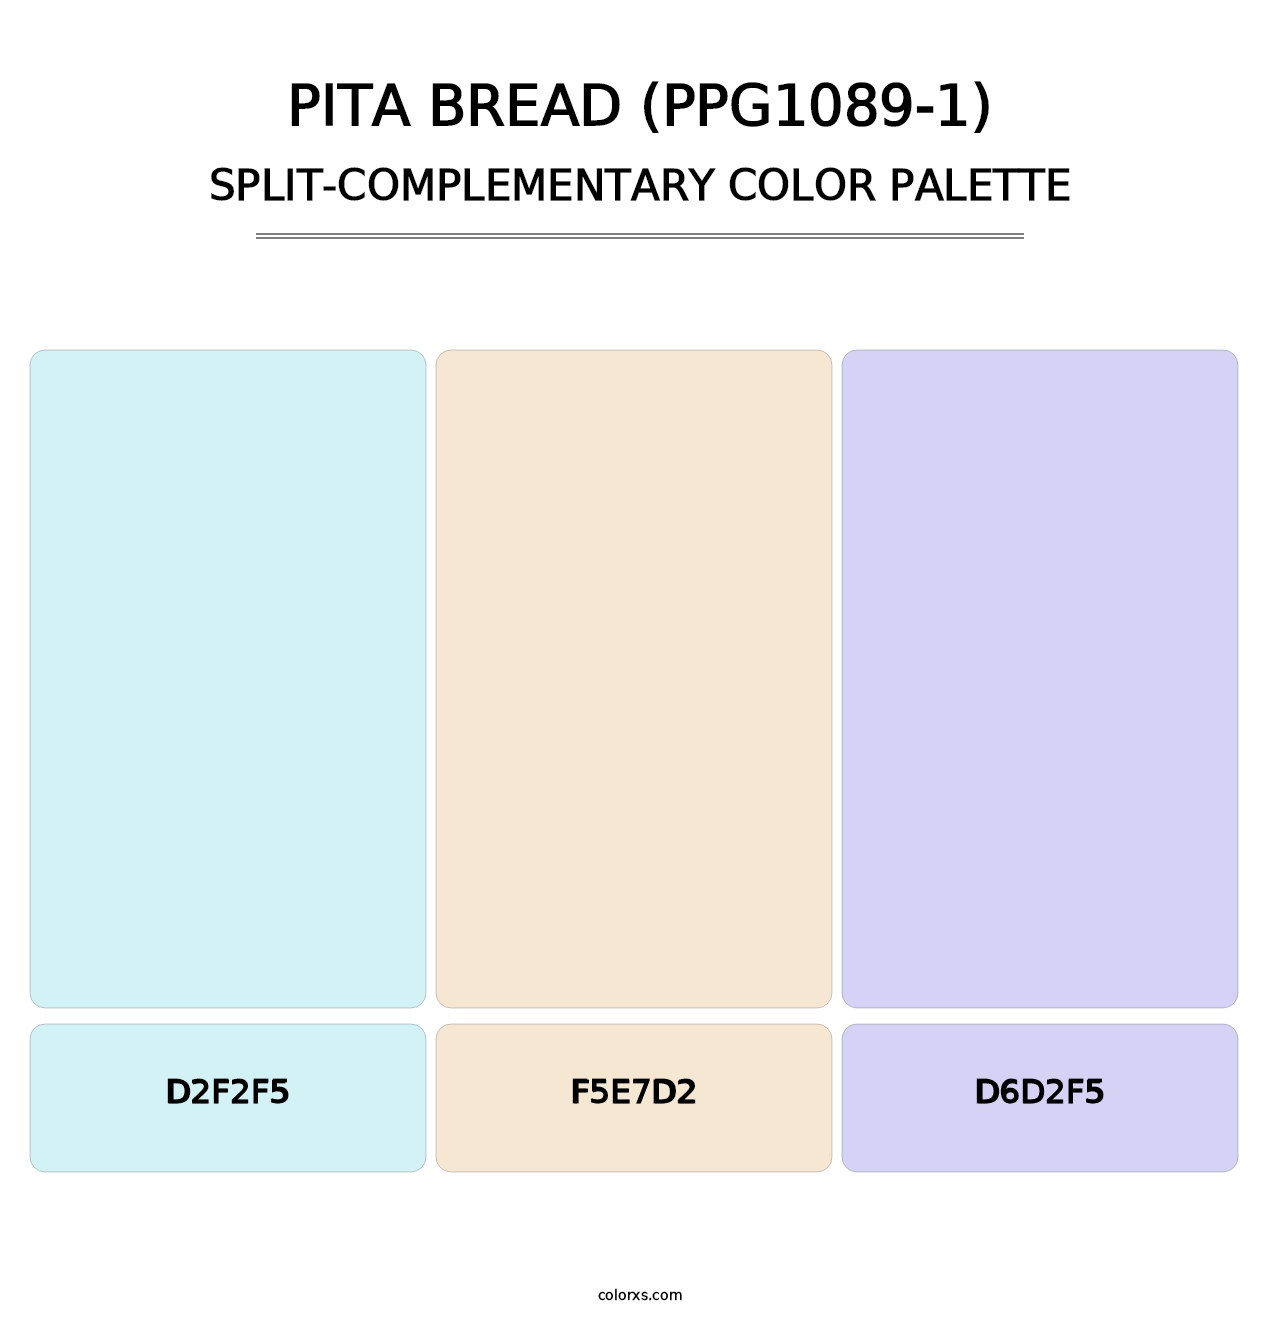 Pita Bread (PPG1089-1) - Split-Complementary Color Palette